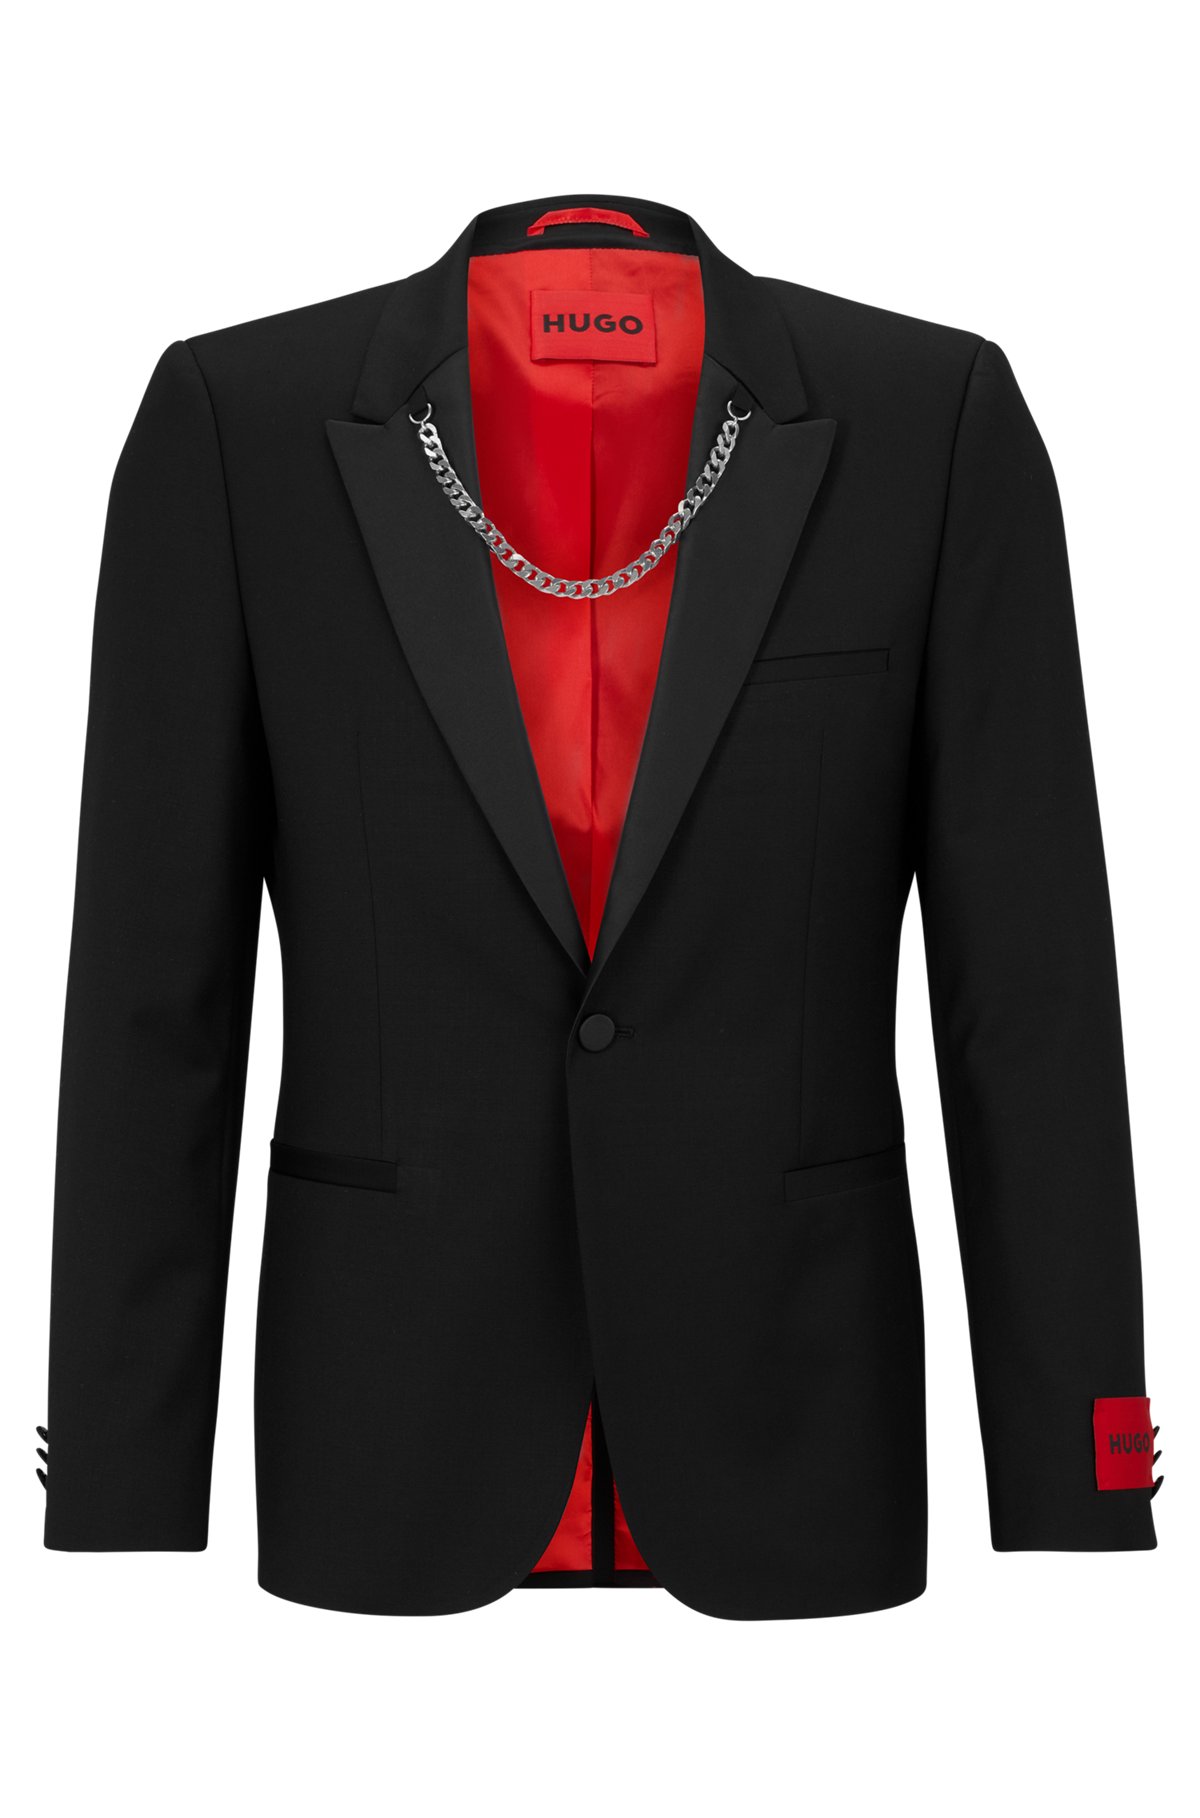 Red Blazer Black Trim | proyectosarquitectonicos.ua.es